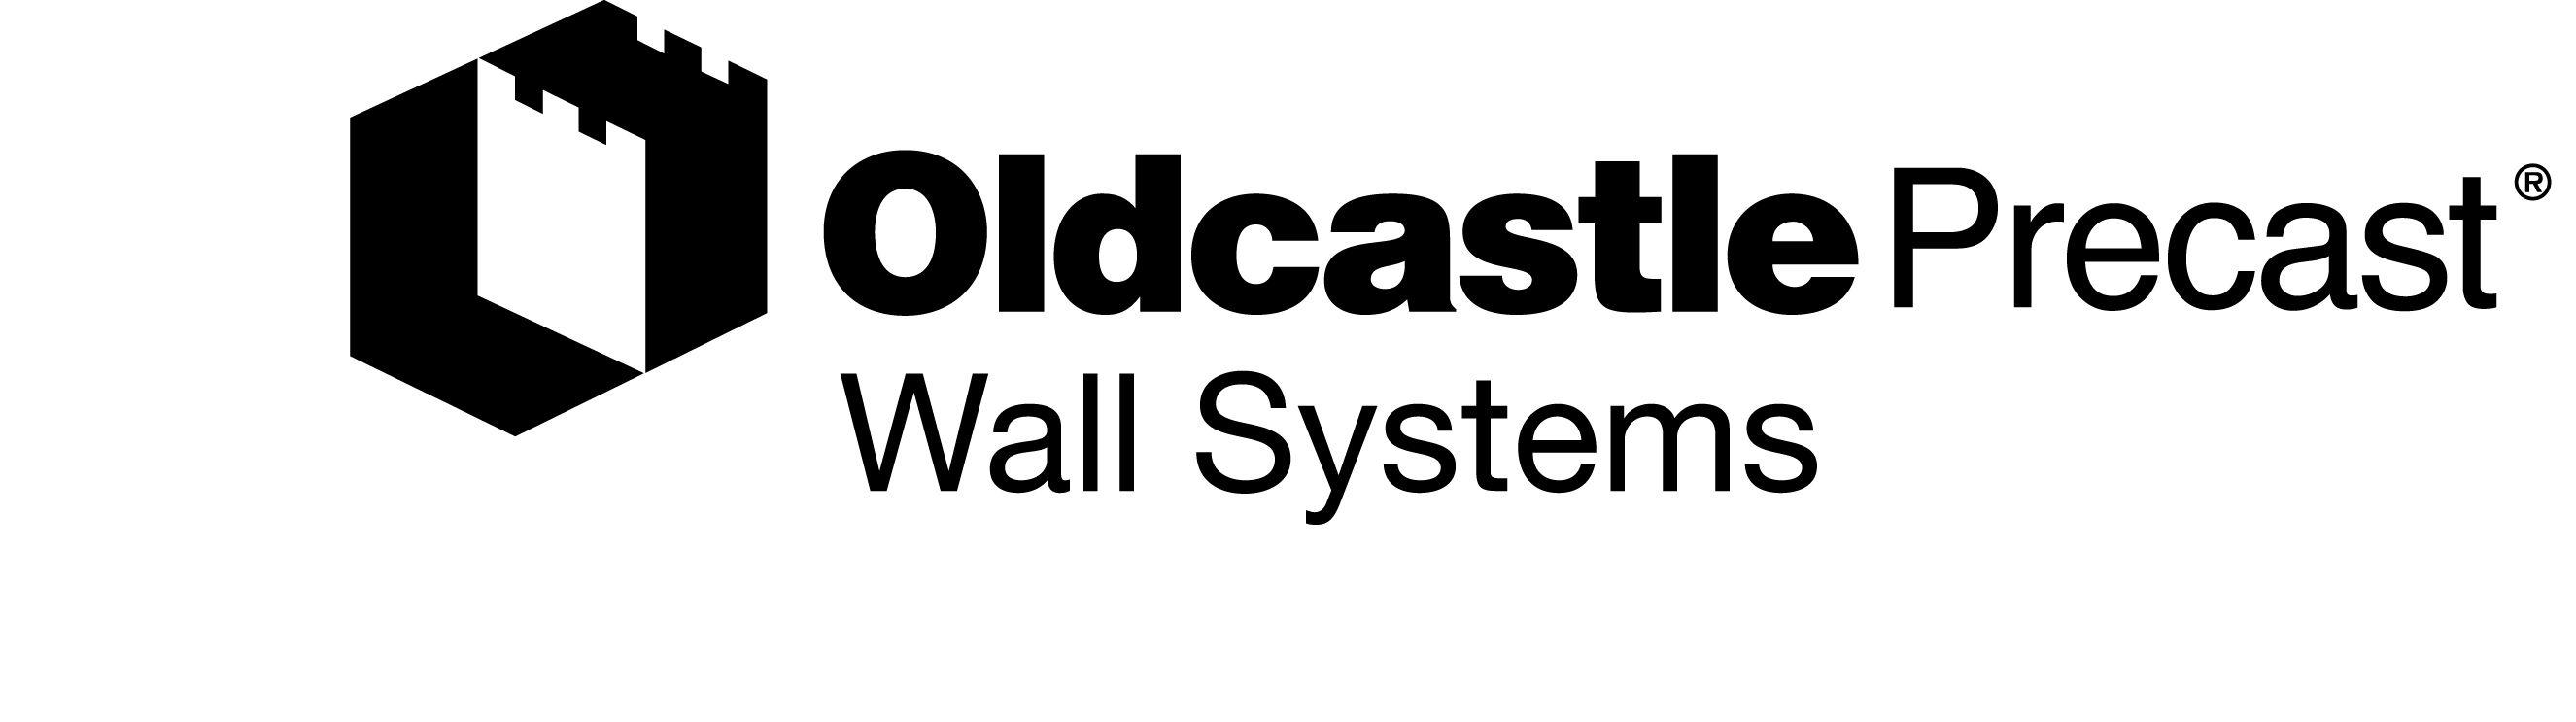 Oldcastle Logo - Logos | Oldcastle Precast Promotional Item E-Store